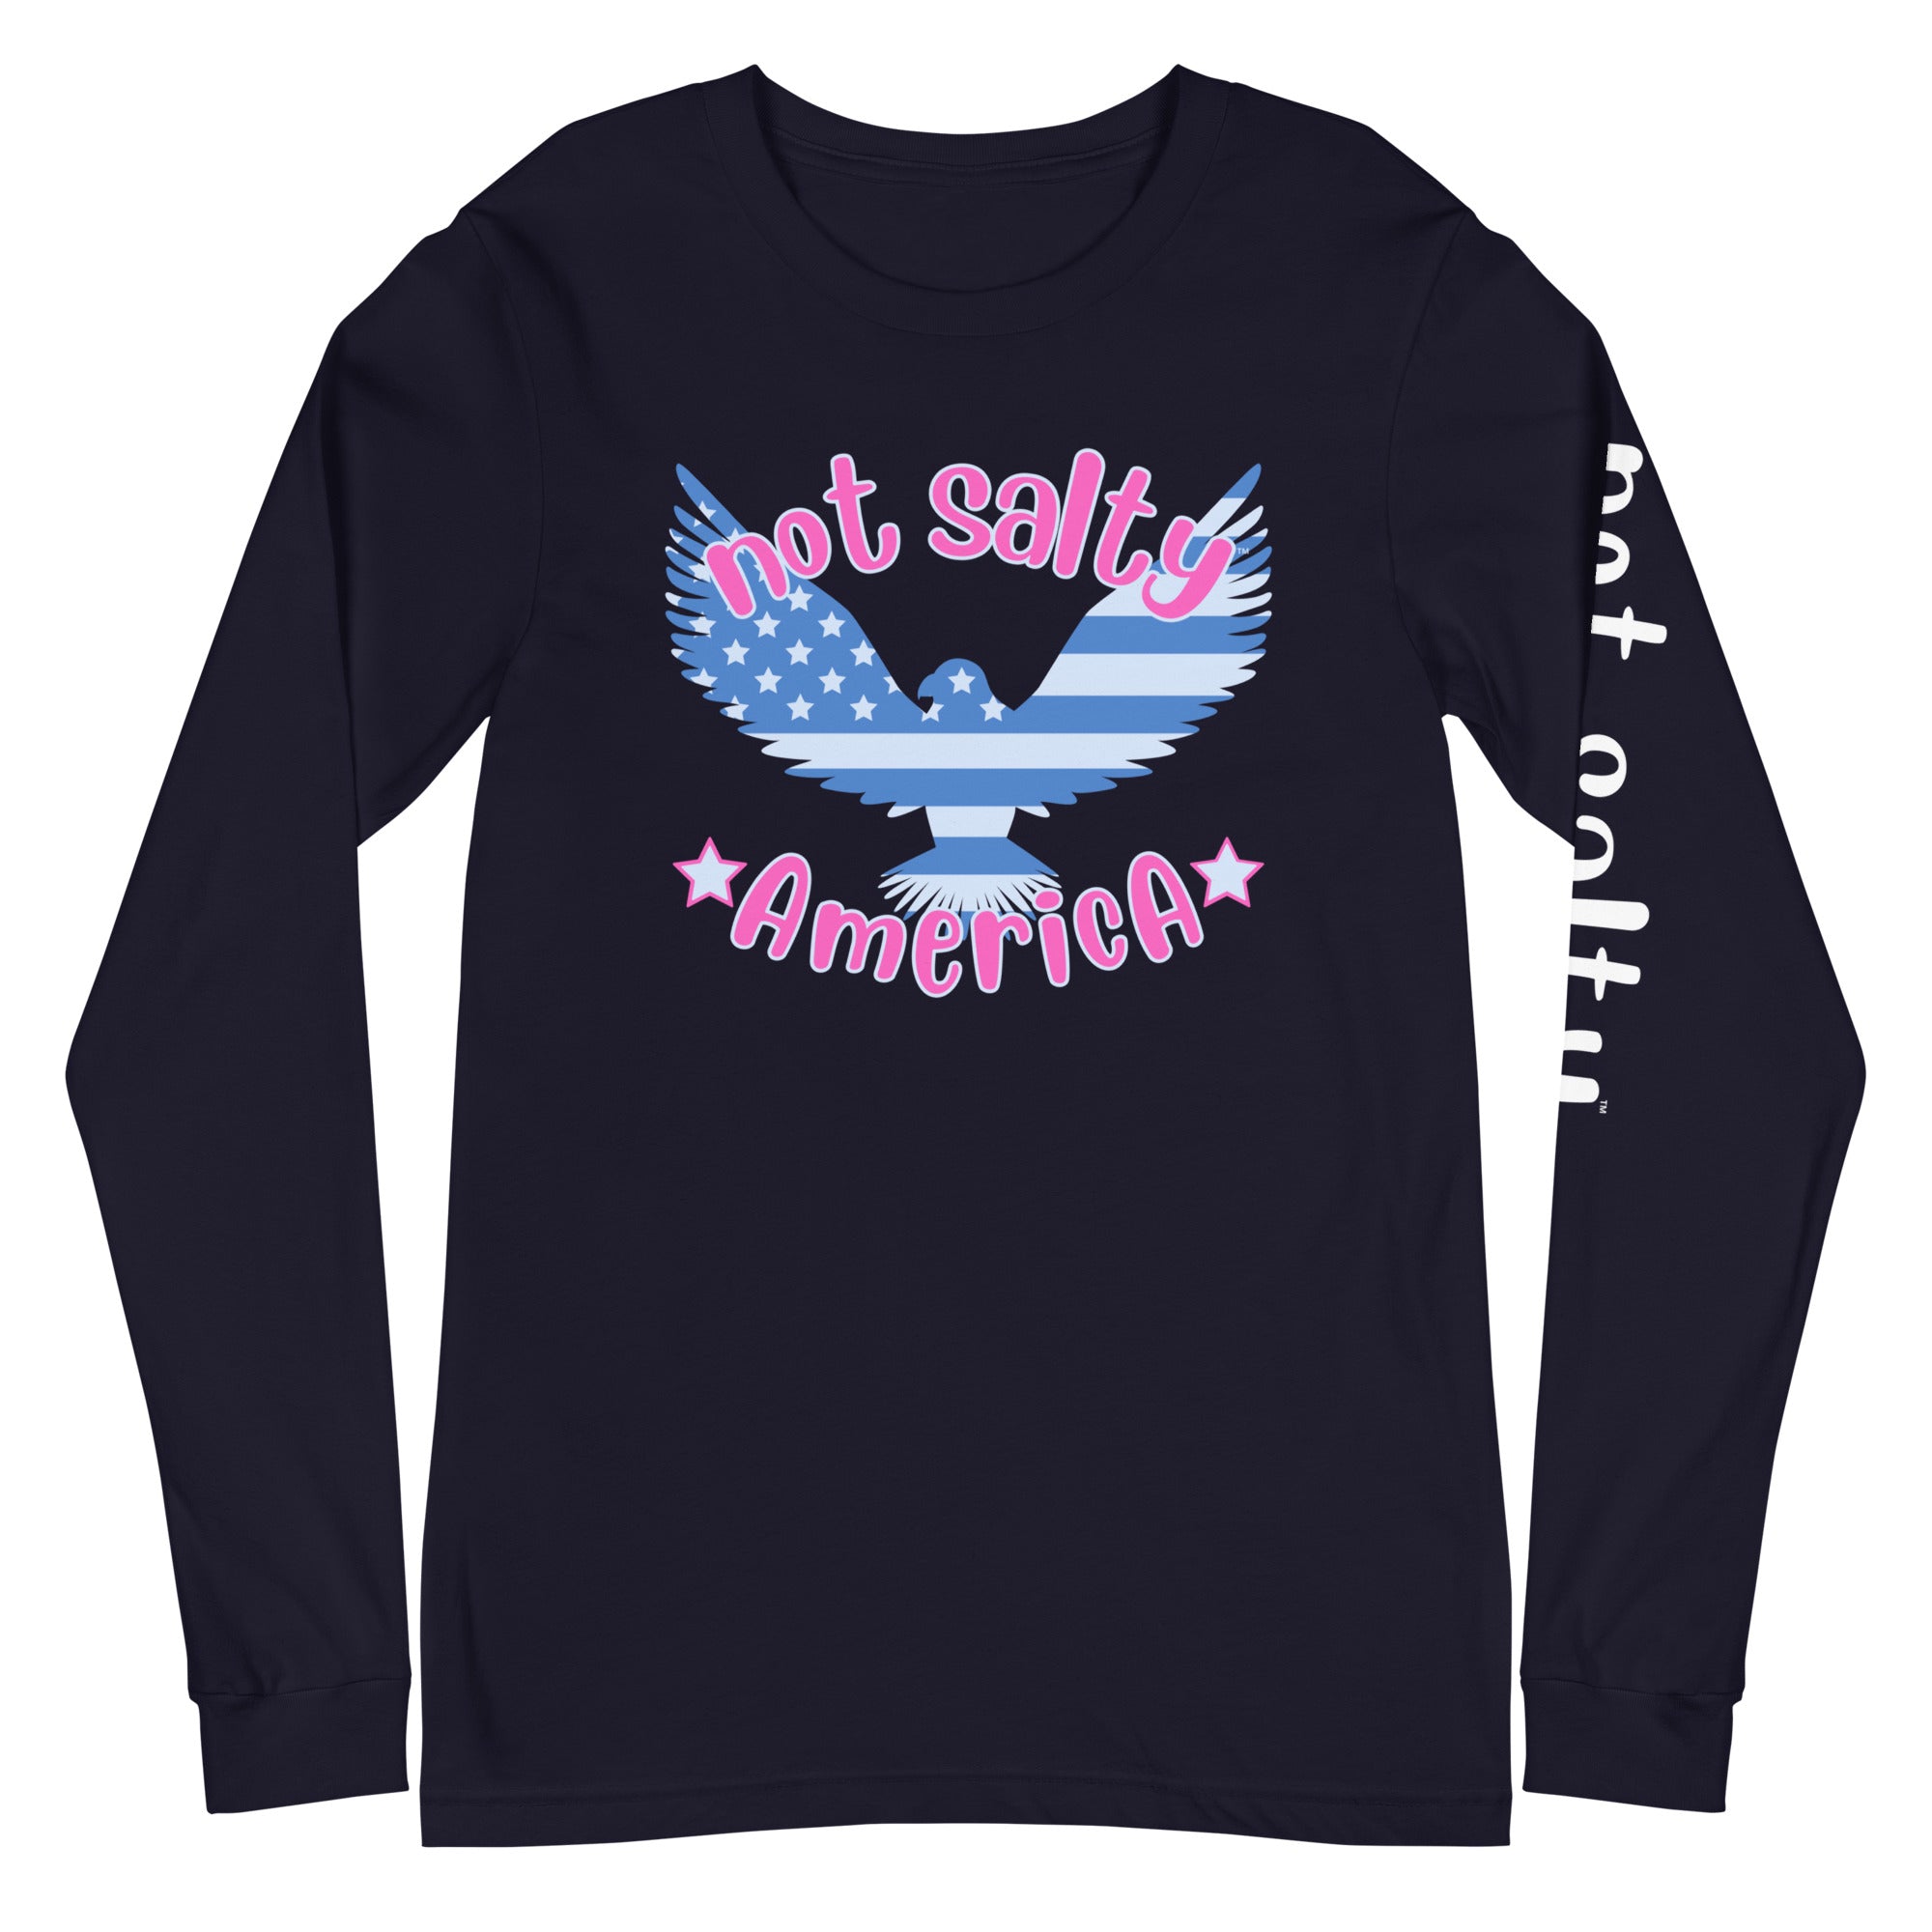 Not Salty "Relax America" Men's/Unisex Long-Sleeve T-Shirt